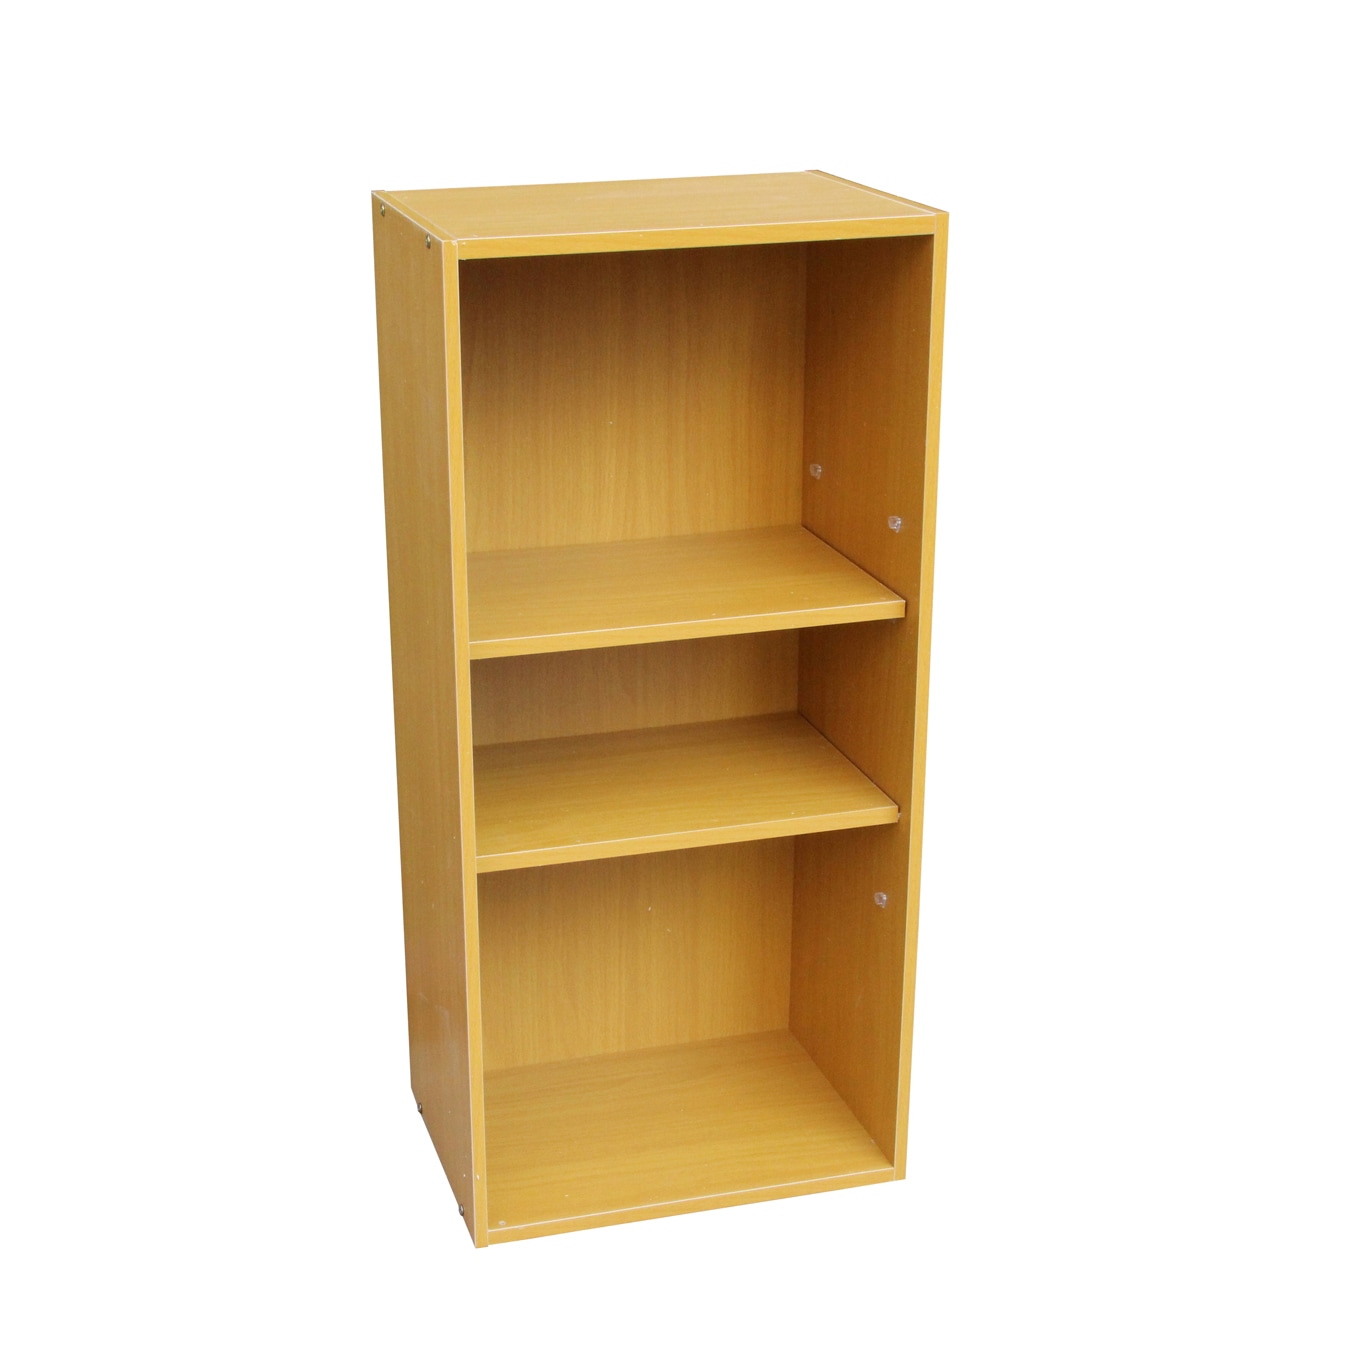 Shop Oak 3 Tier Adjustable Book Shelf On Sale Overstock 7878001